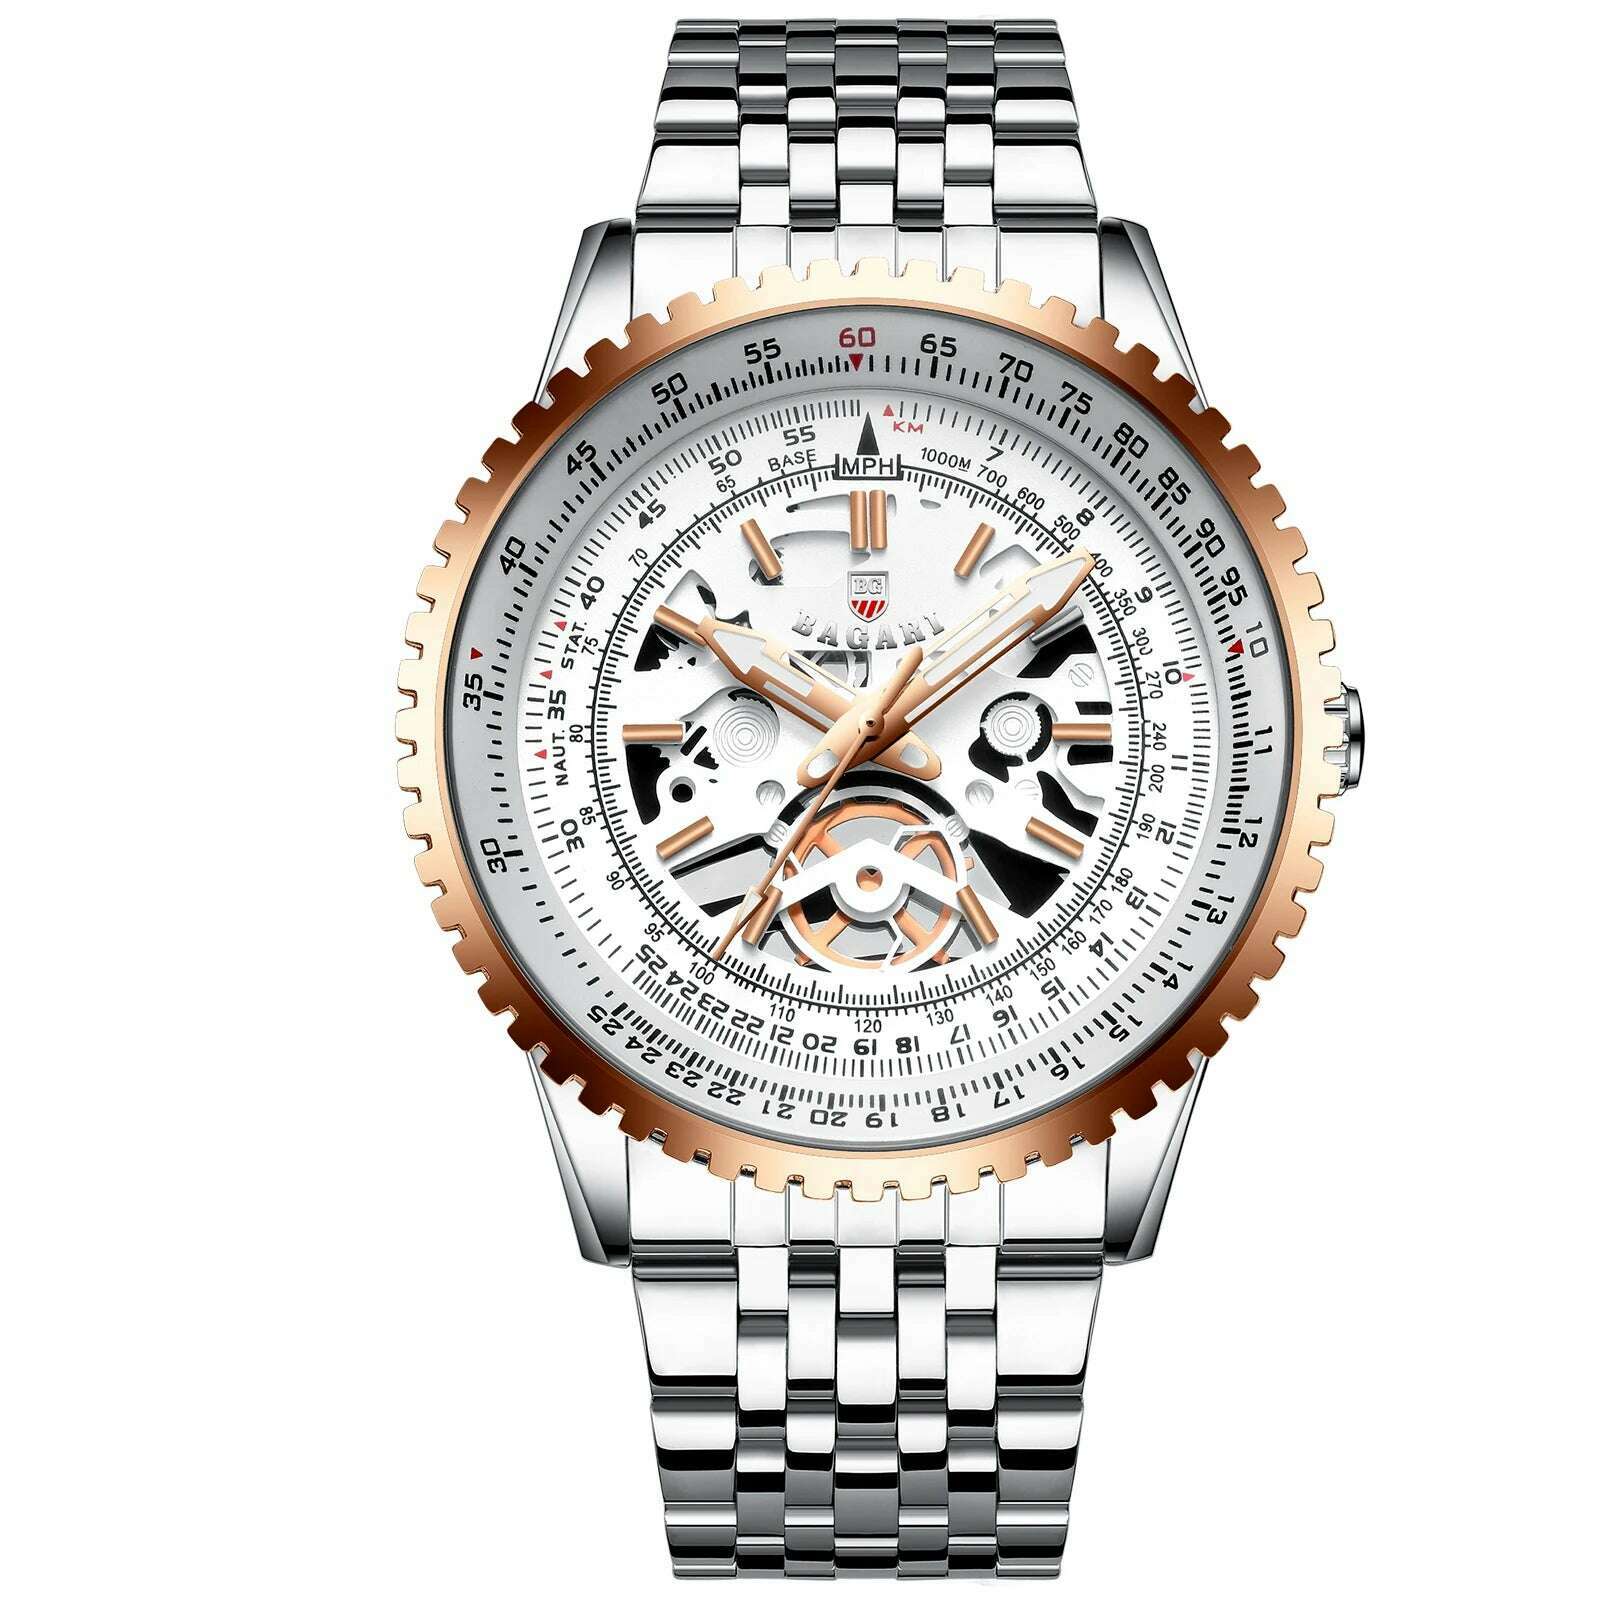 Creative Gear Watch Men Luxury Stainless Steel Clock Fashion Waterproof Business Sport Quartz WristWatch Male Relogio Masculine